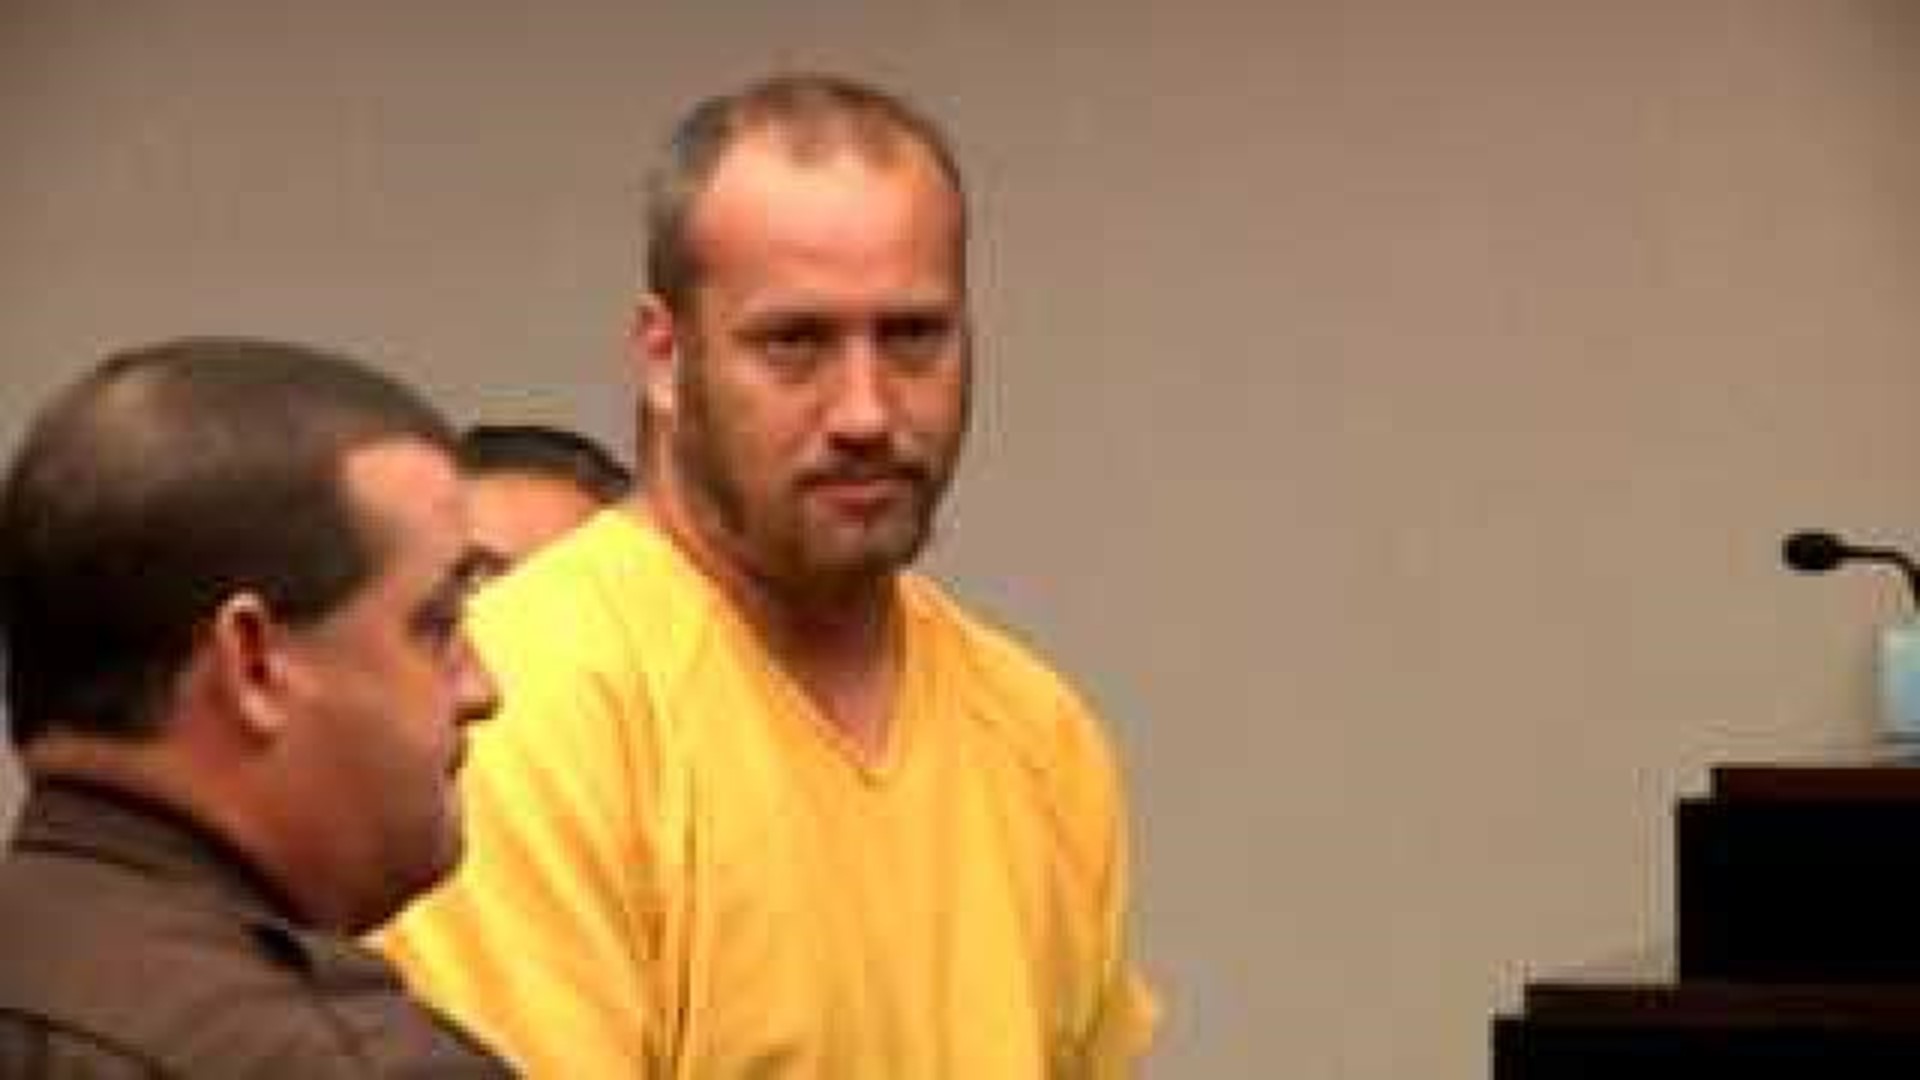 RAW VIDEO: Tim McVay in court 7-19-14